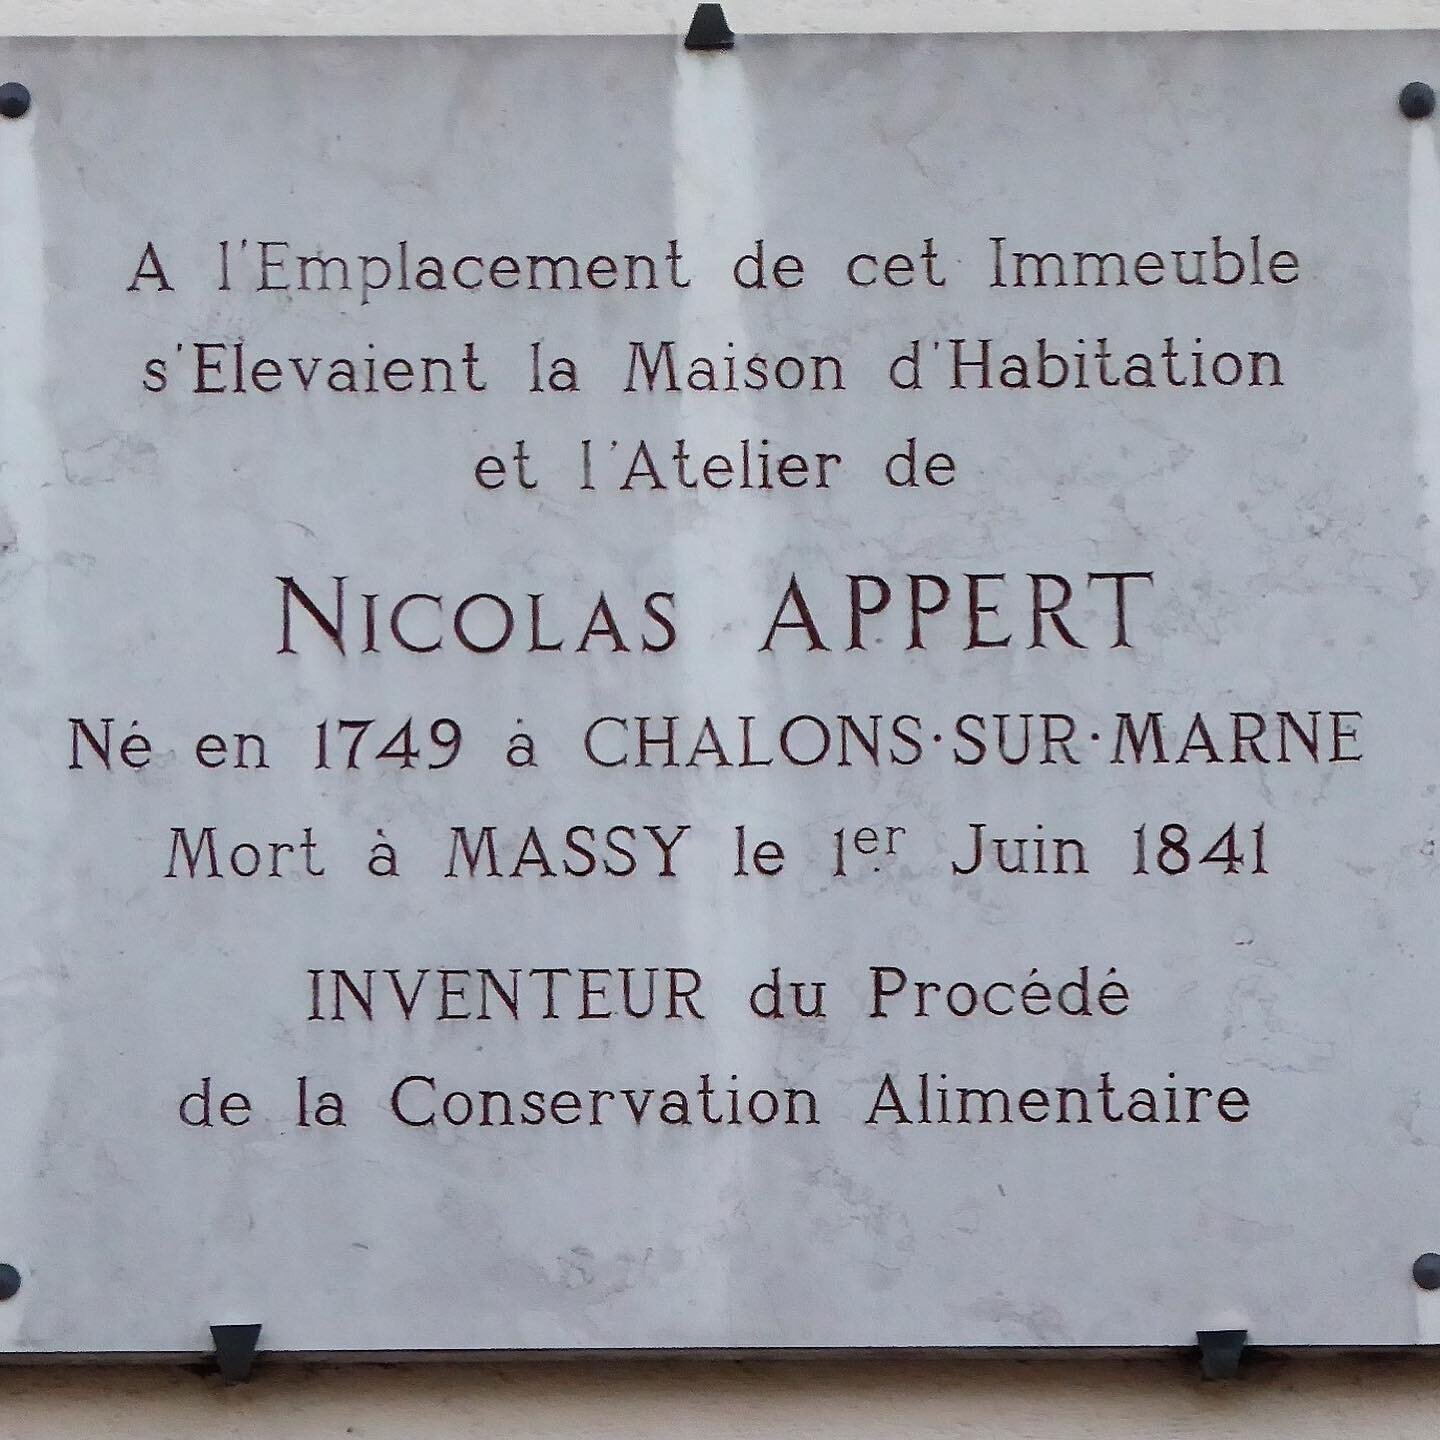 Plaque-Nicolas-Appert-Parisology1.jpg